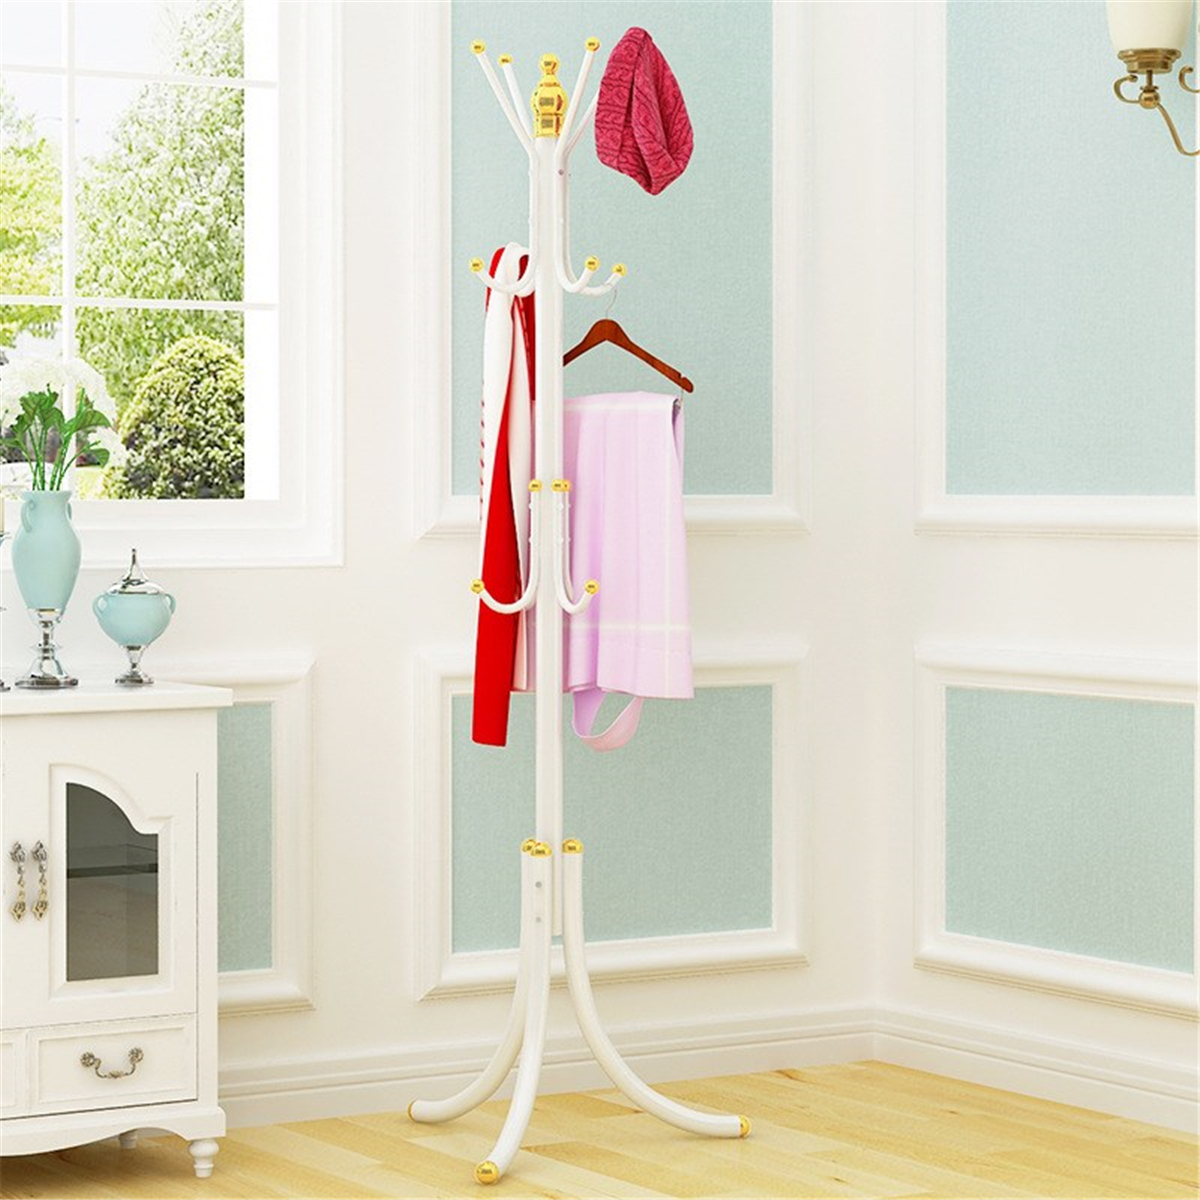 Coat-Rack-Hat-Stand-Clothes-Hanger-Umbrella-Holder-Metal-Home-Office-Entry-1679513-2